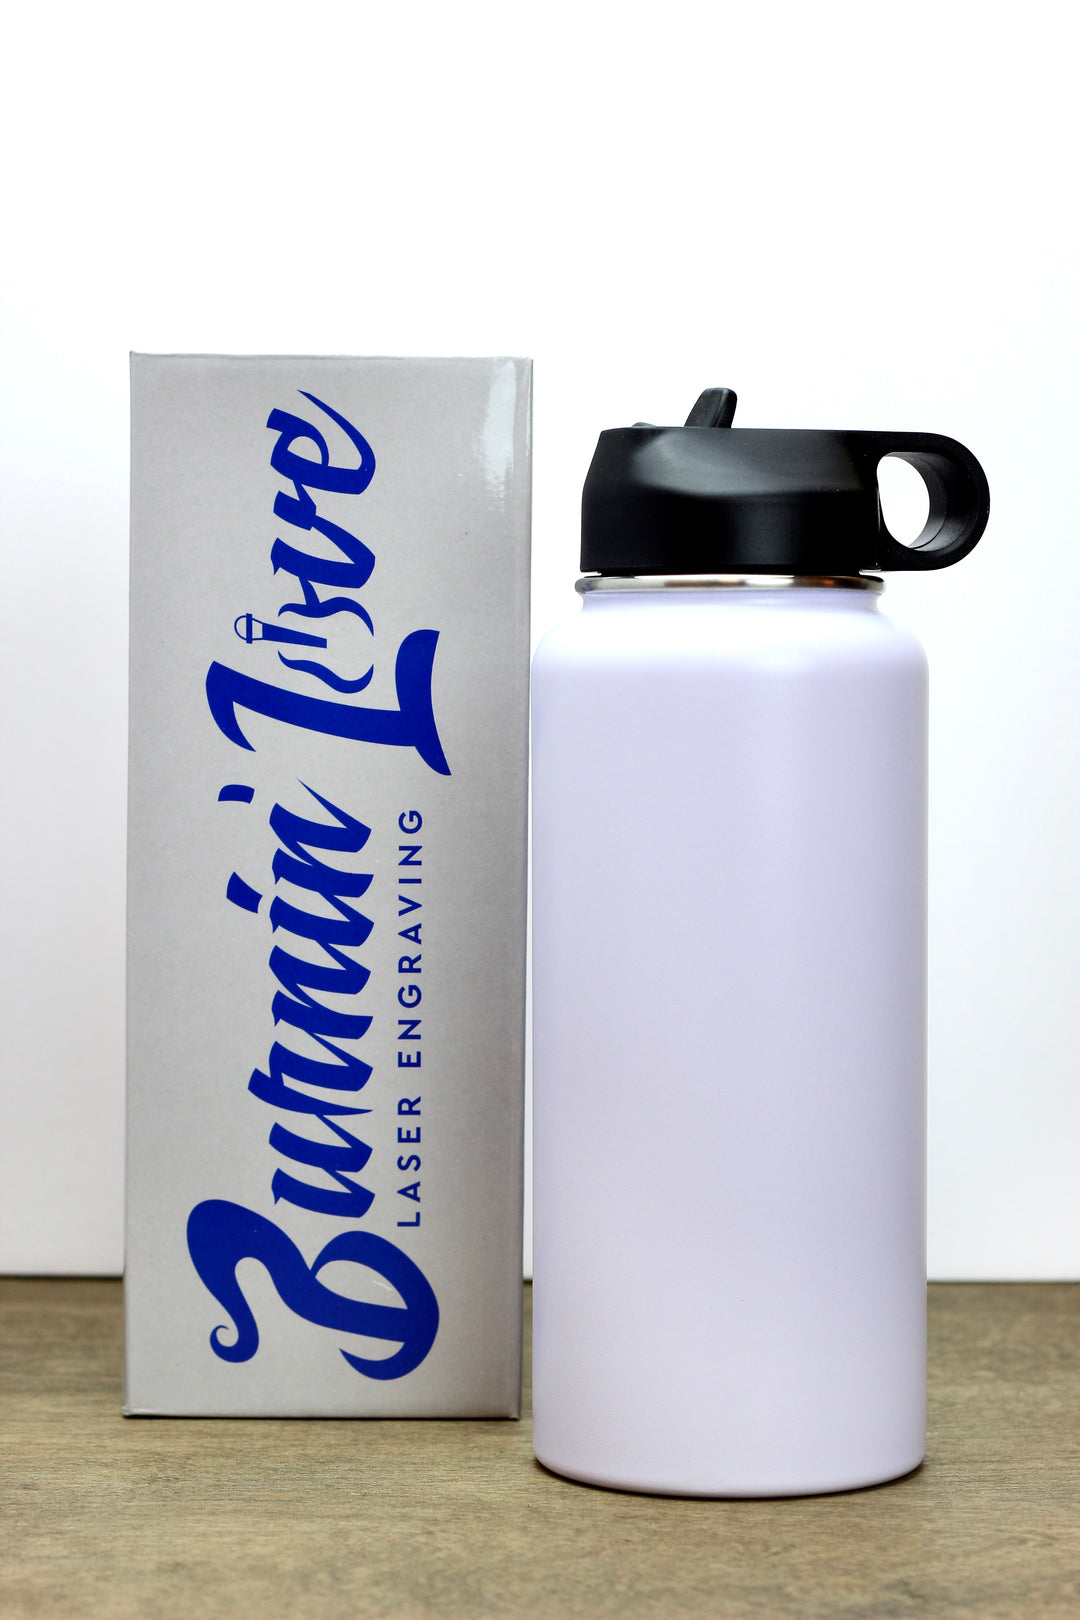 32oz Burnin' Love Laser Engraving Water Bottles - Create your own!